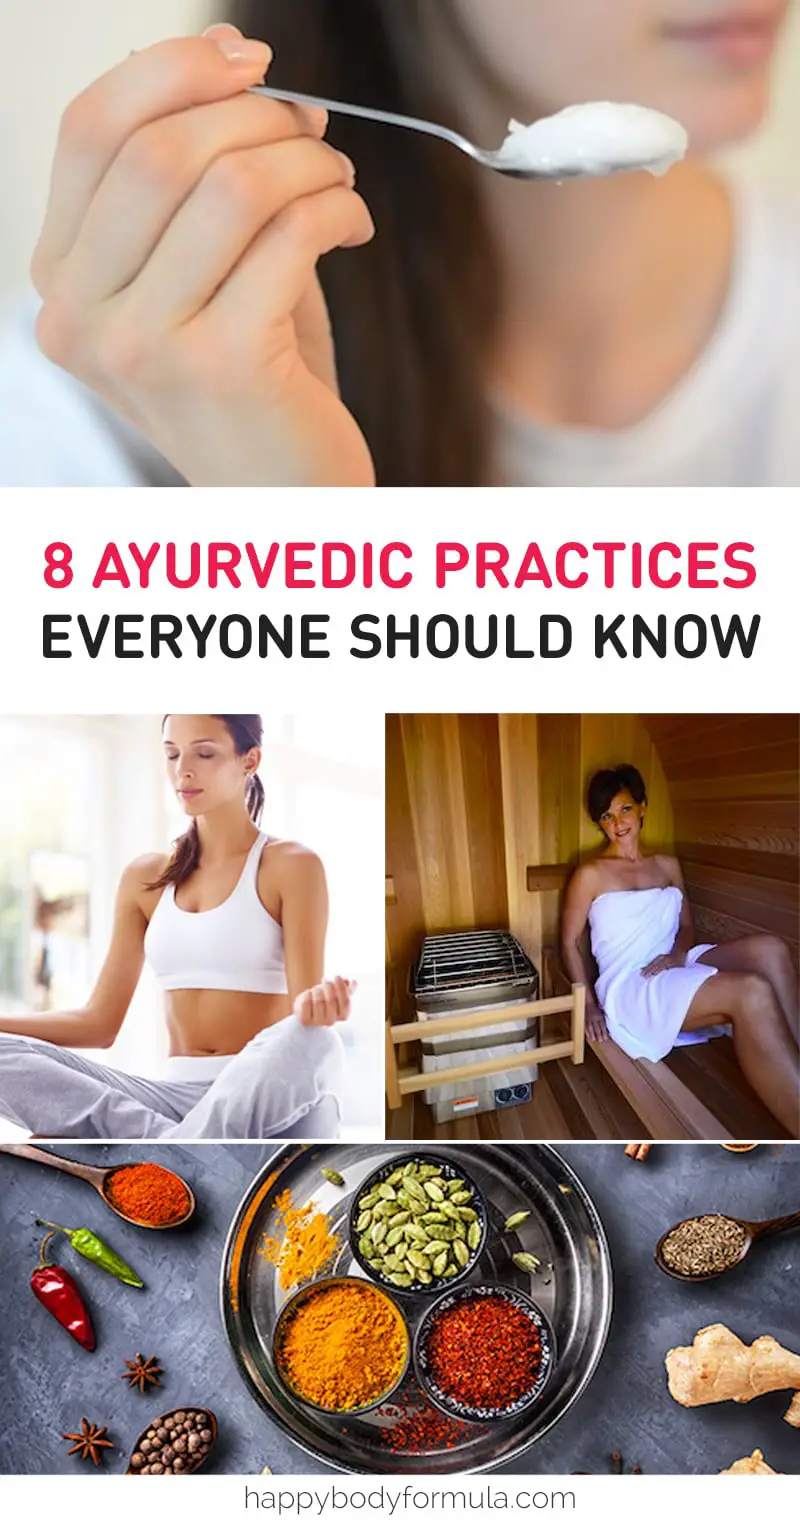 8 Ayurvedic Practices Everyone Should Know About | Happybodyformula.com